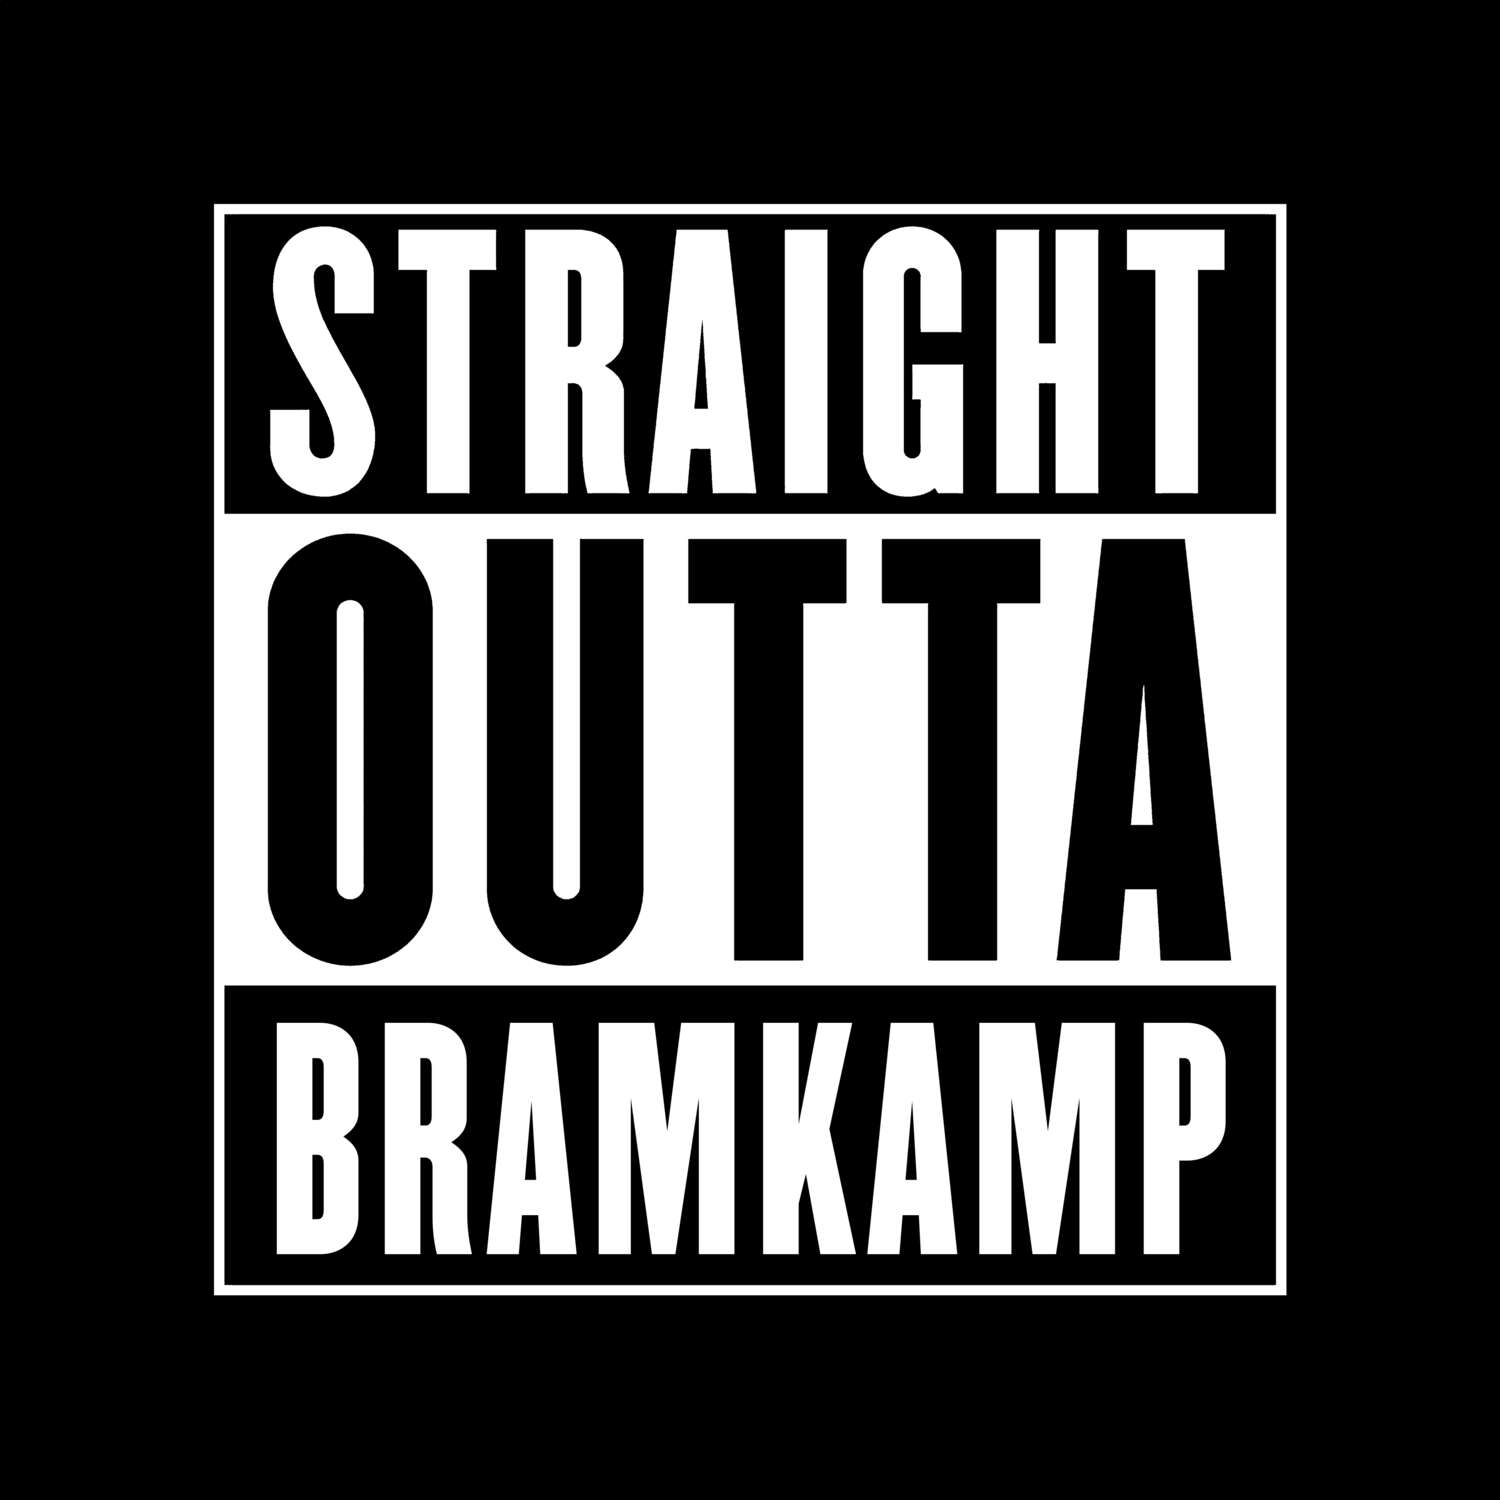 Bramkamp T-Shirt »Straight Outta«